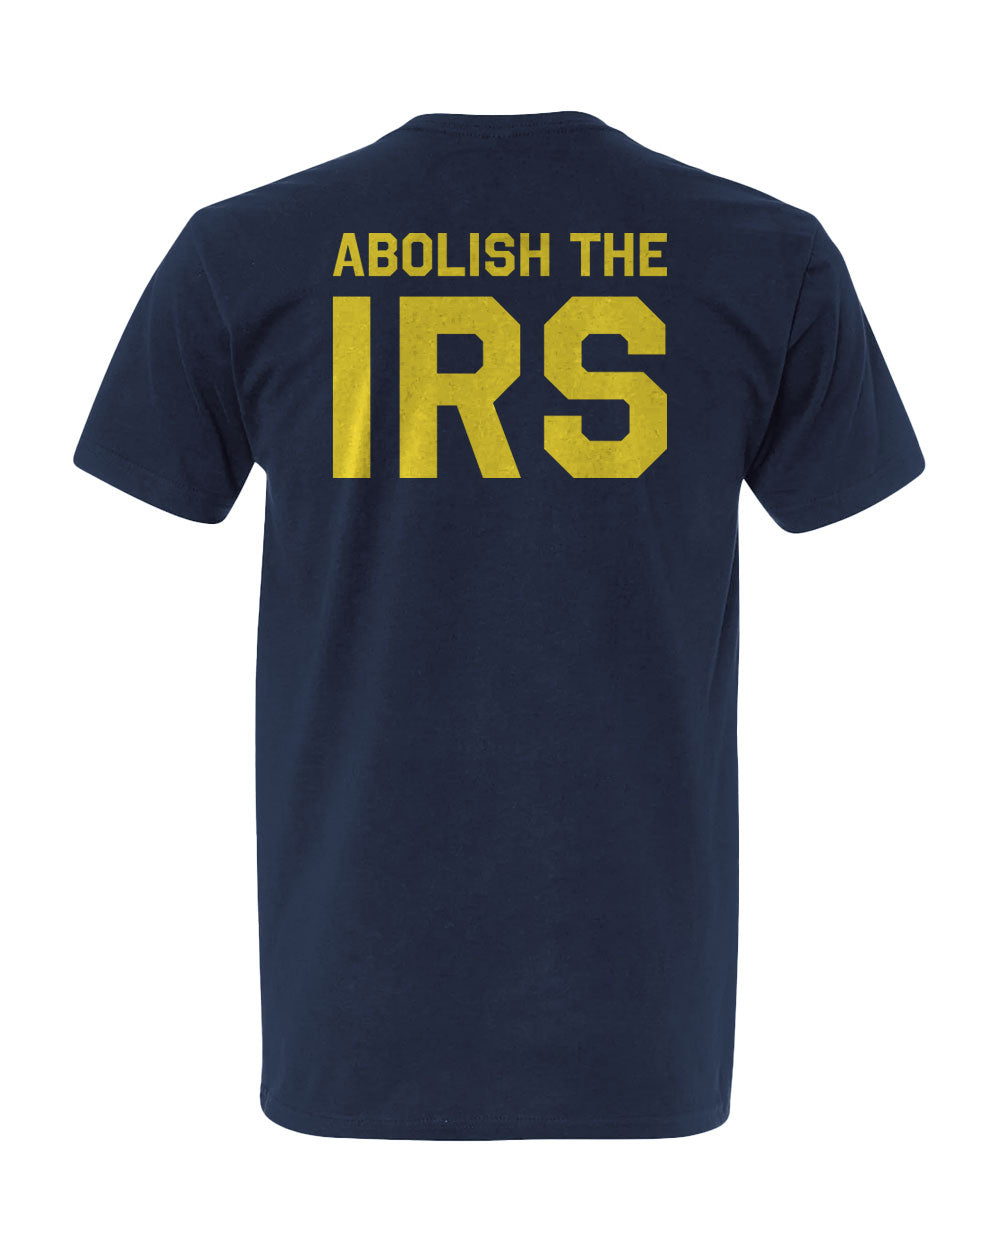 Abolish the IRS Tee